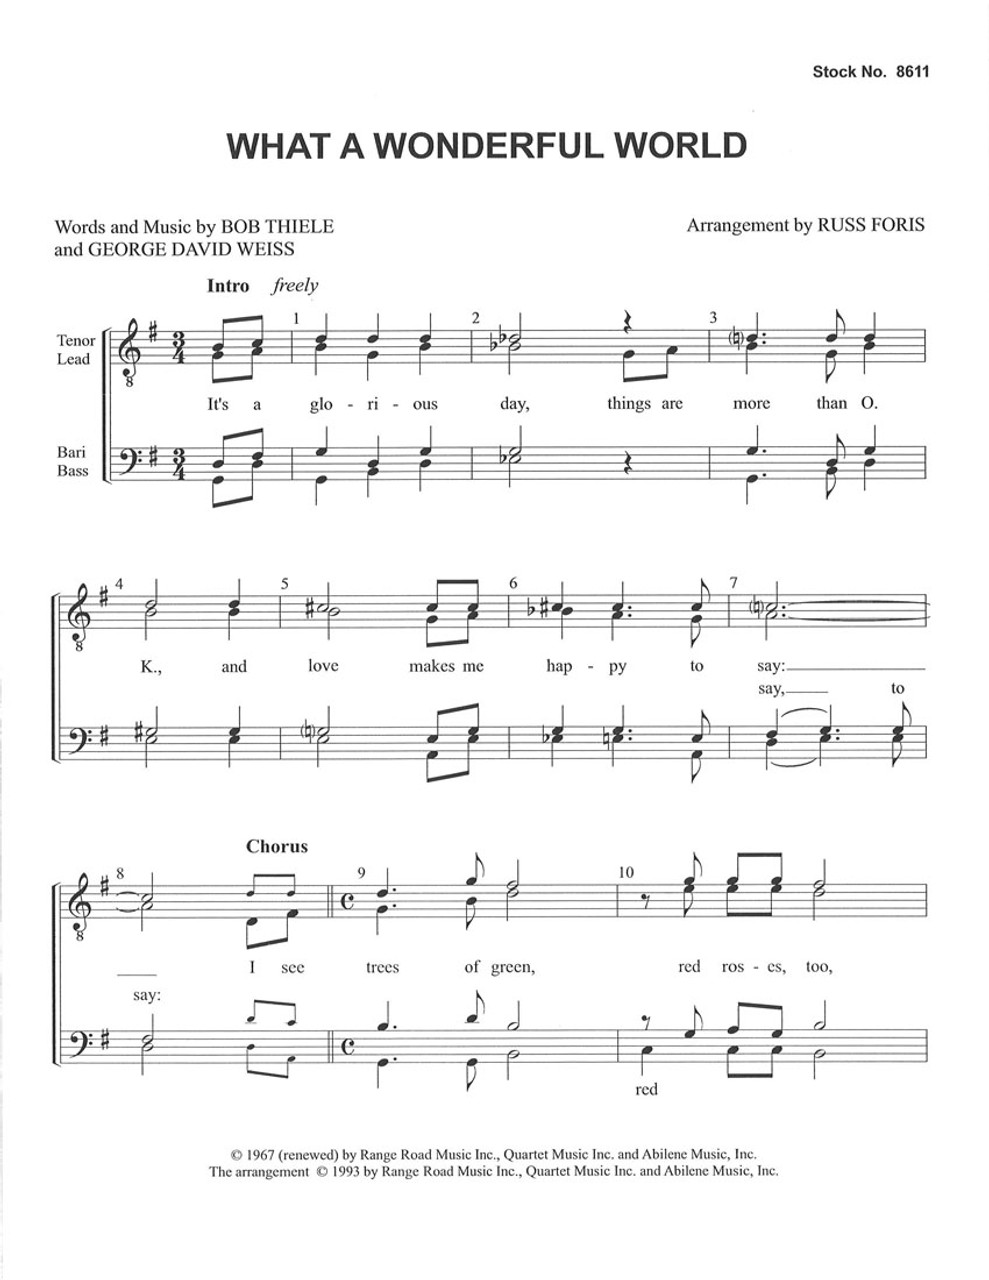 What a Wonderful World (TTBB) (arr. Foris) - SPECIAL ORDER